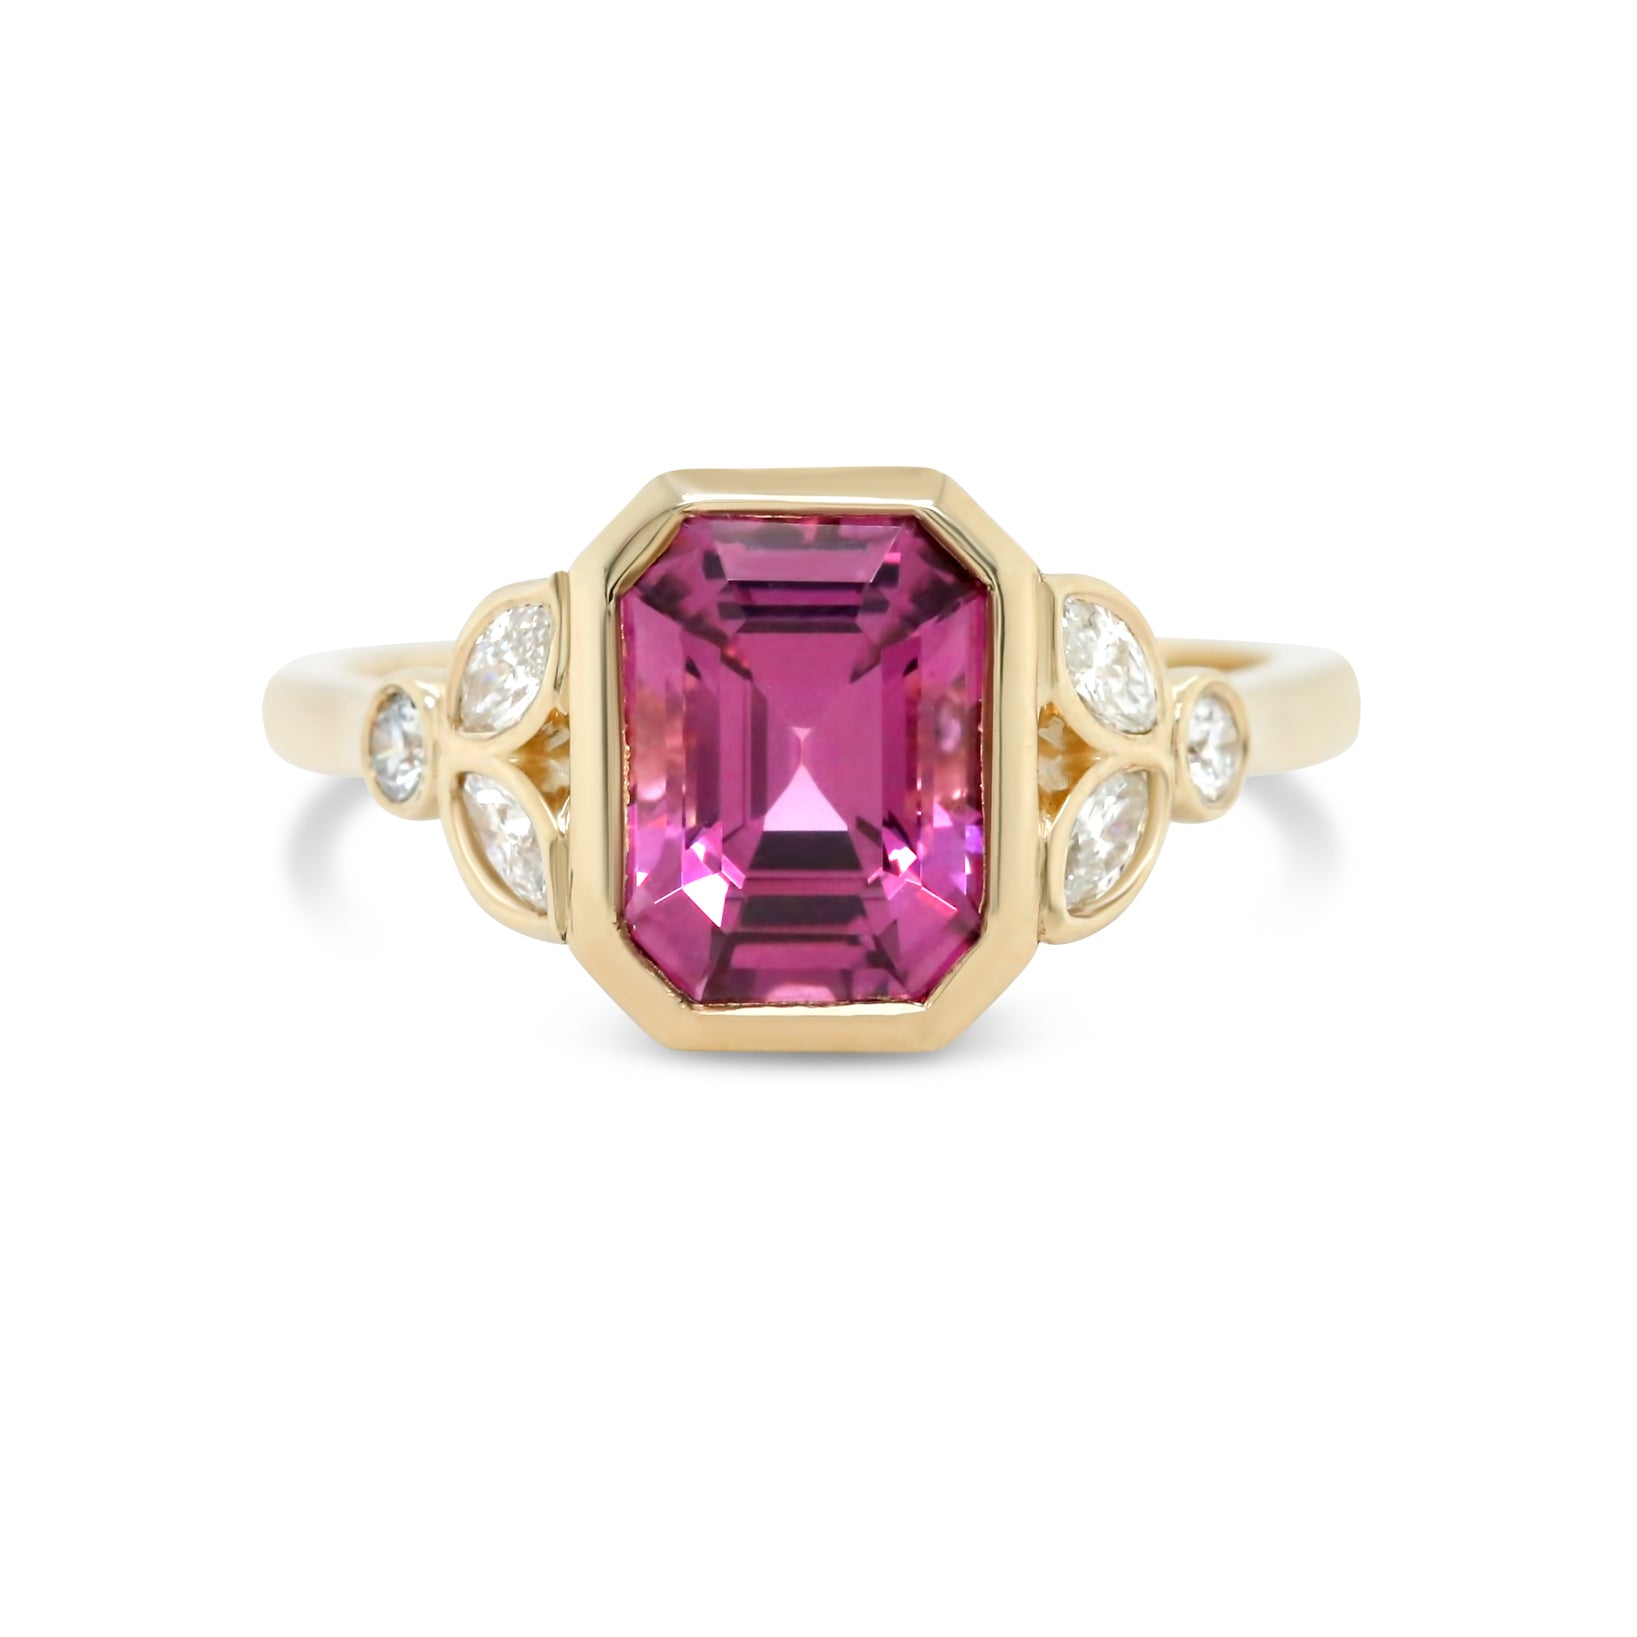 14k yellow gold bezel set emerald cut pink purple spinel marquise round brilliant cut diamond side stones gemstone ring